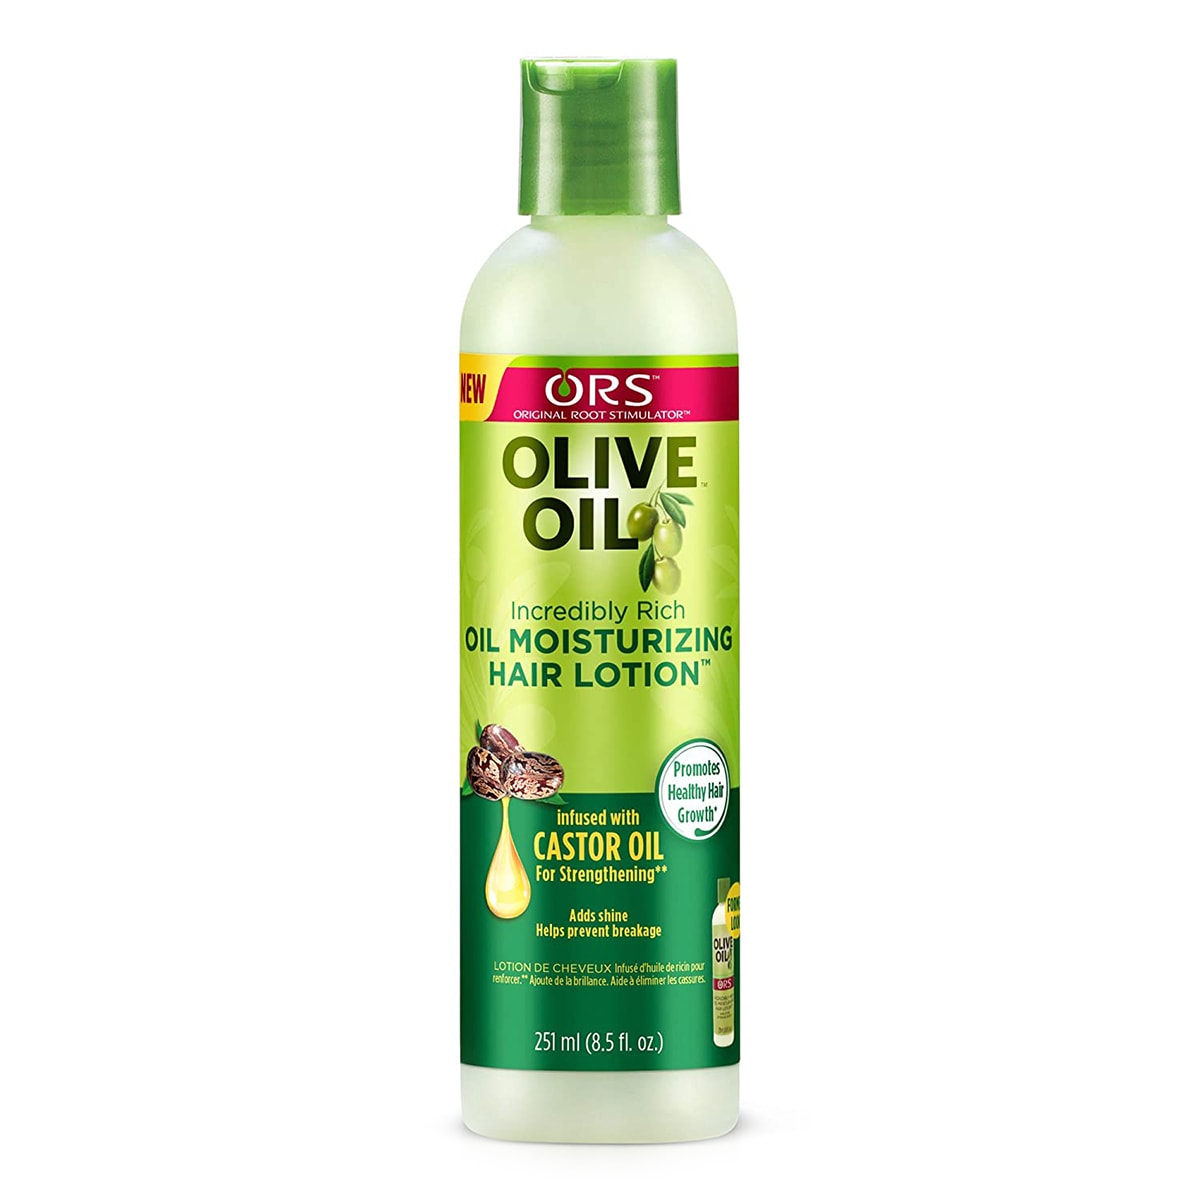 Buy Organic Root Stimulator (ORS) Olive Oil Moisturizing Hair Lotion - 251 ml